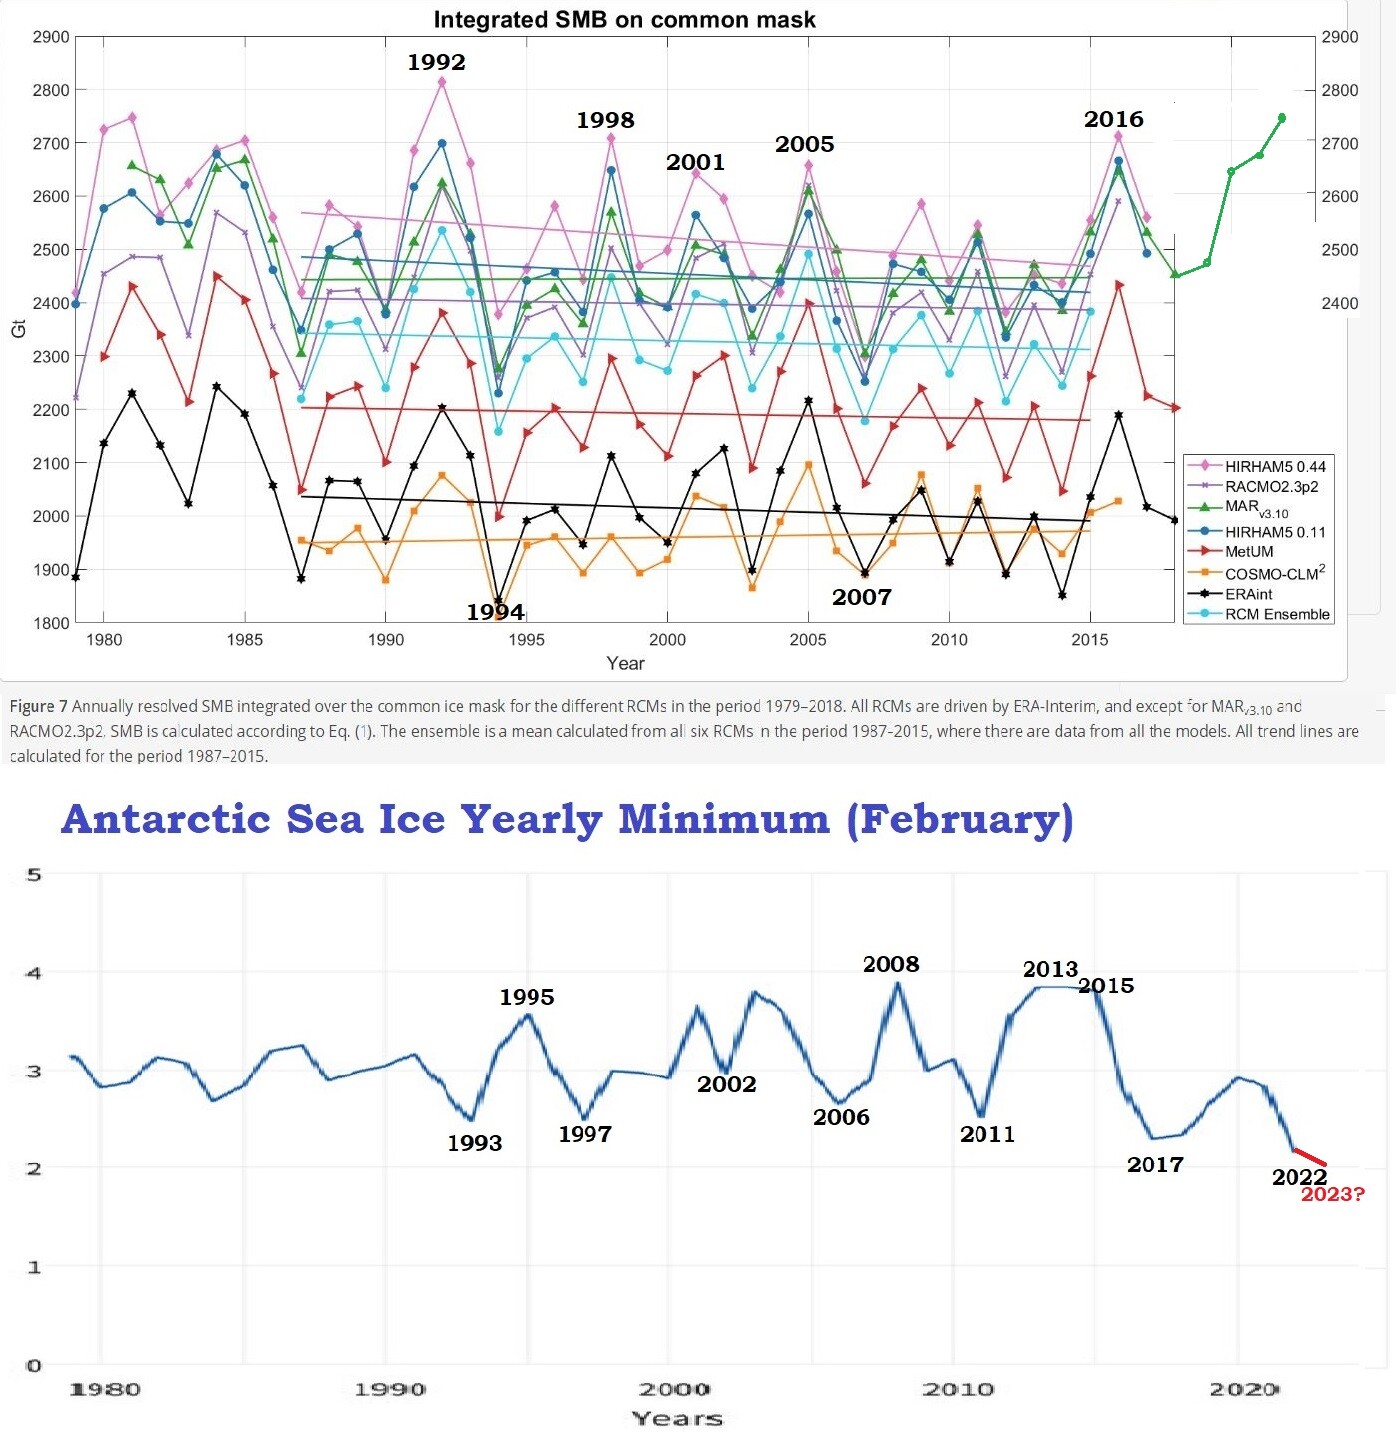 Sea Ice Minimum versus Surface Mass Balance